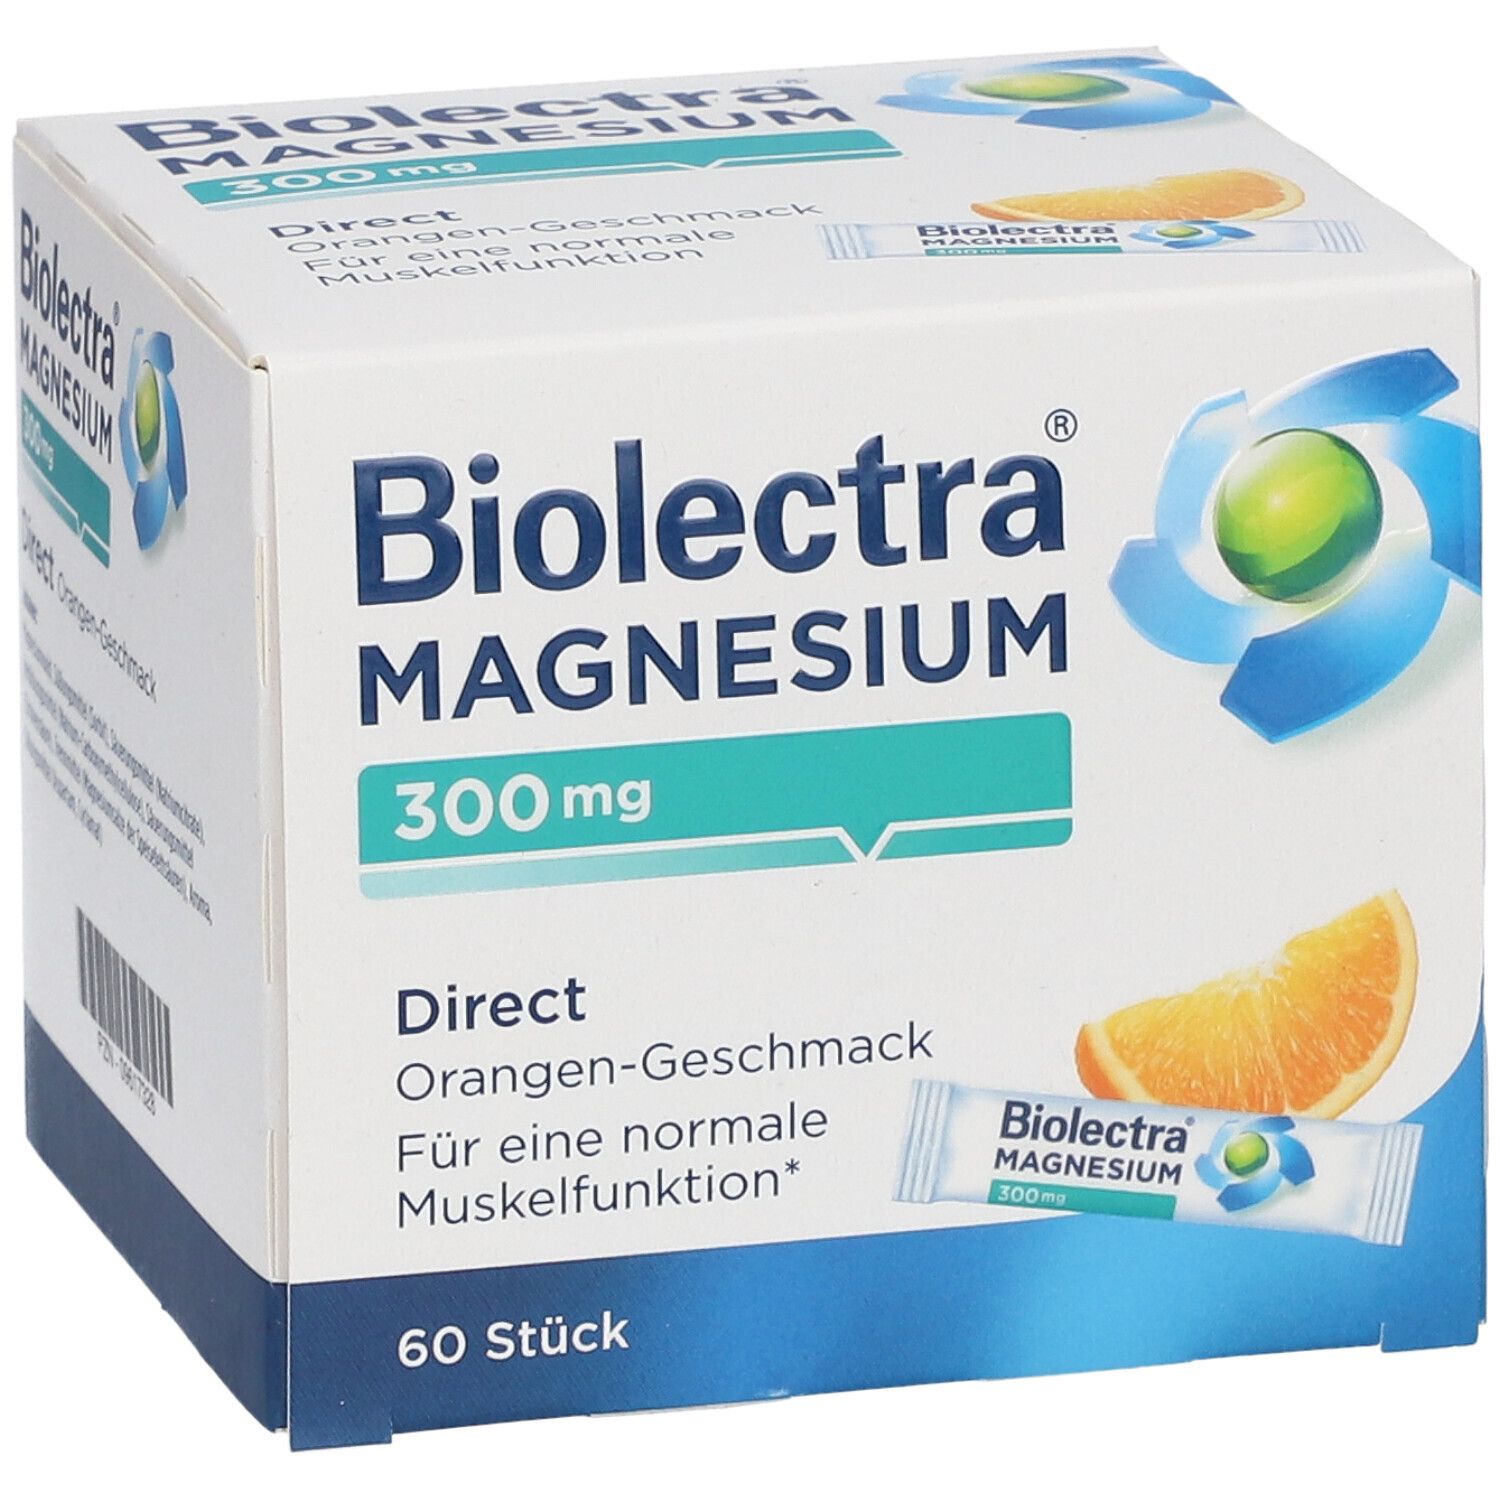 Biolectra® Magnesium 300 mg Direct Orangengeschmack